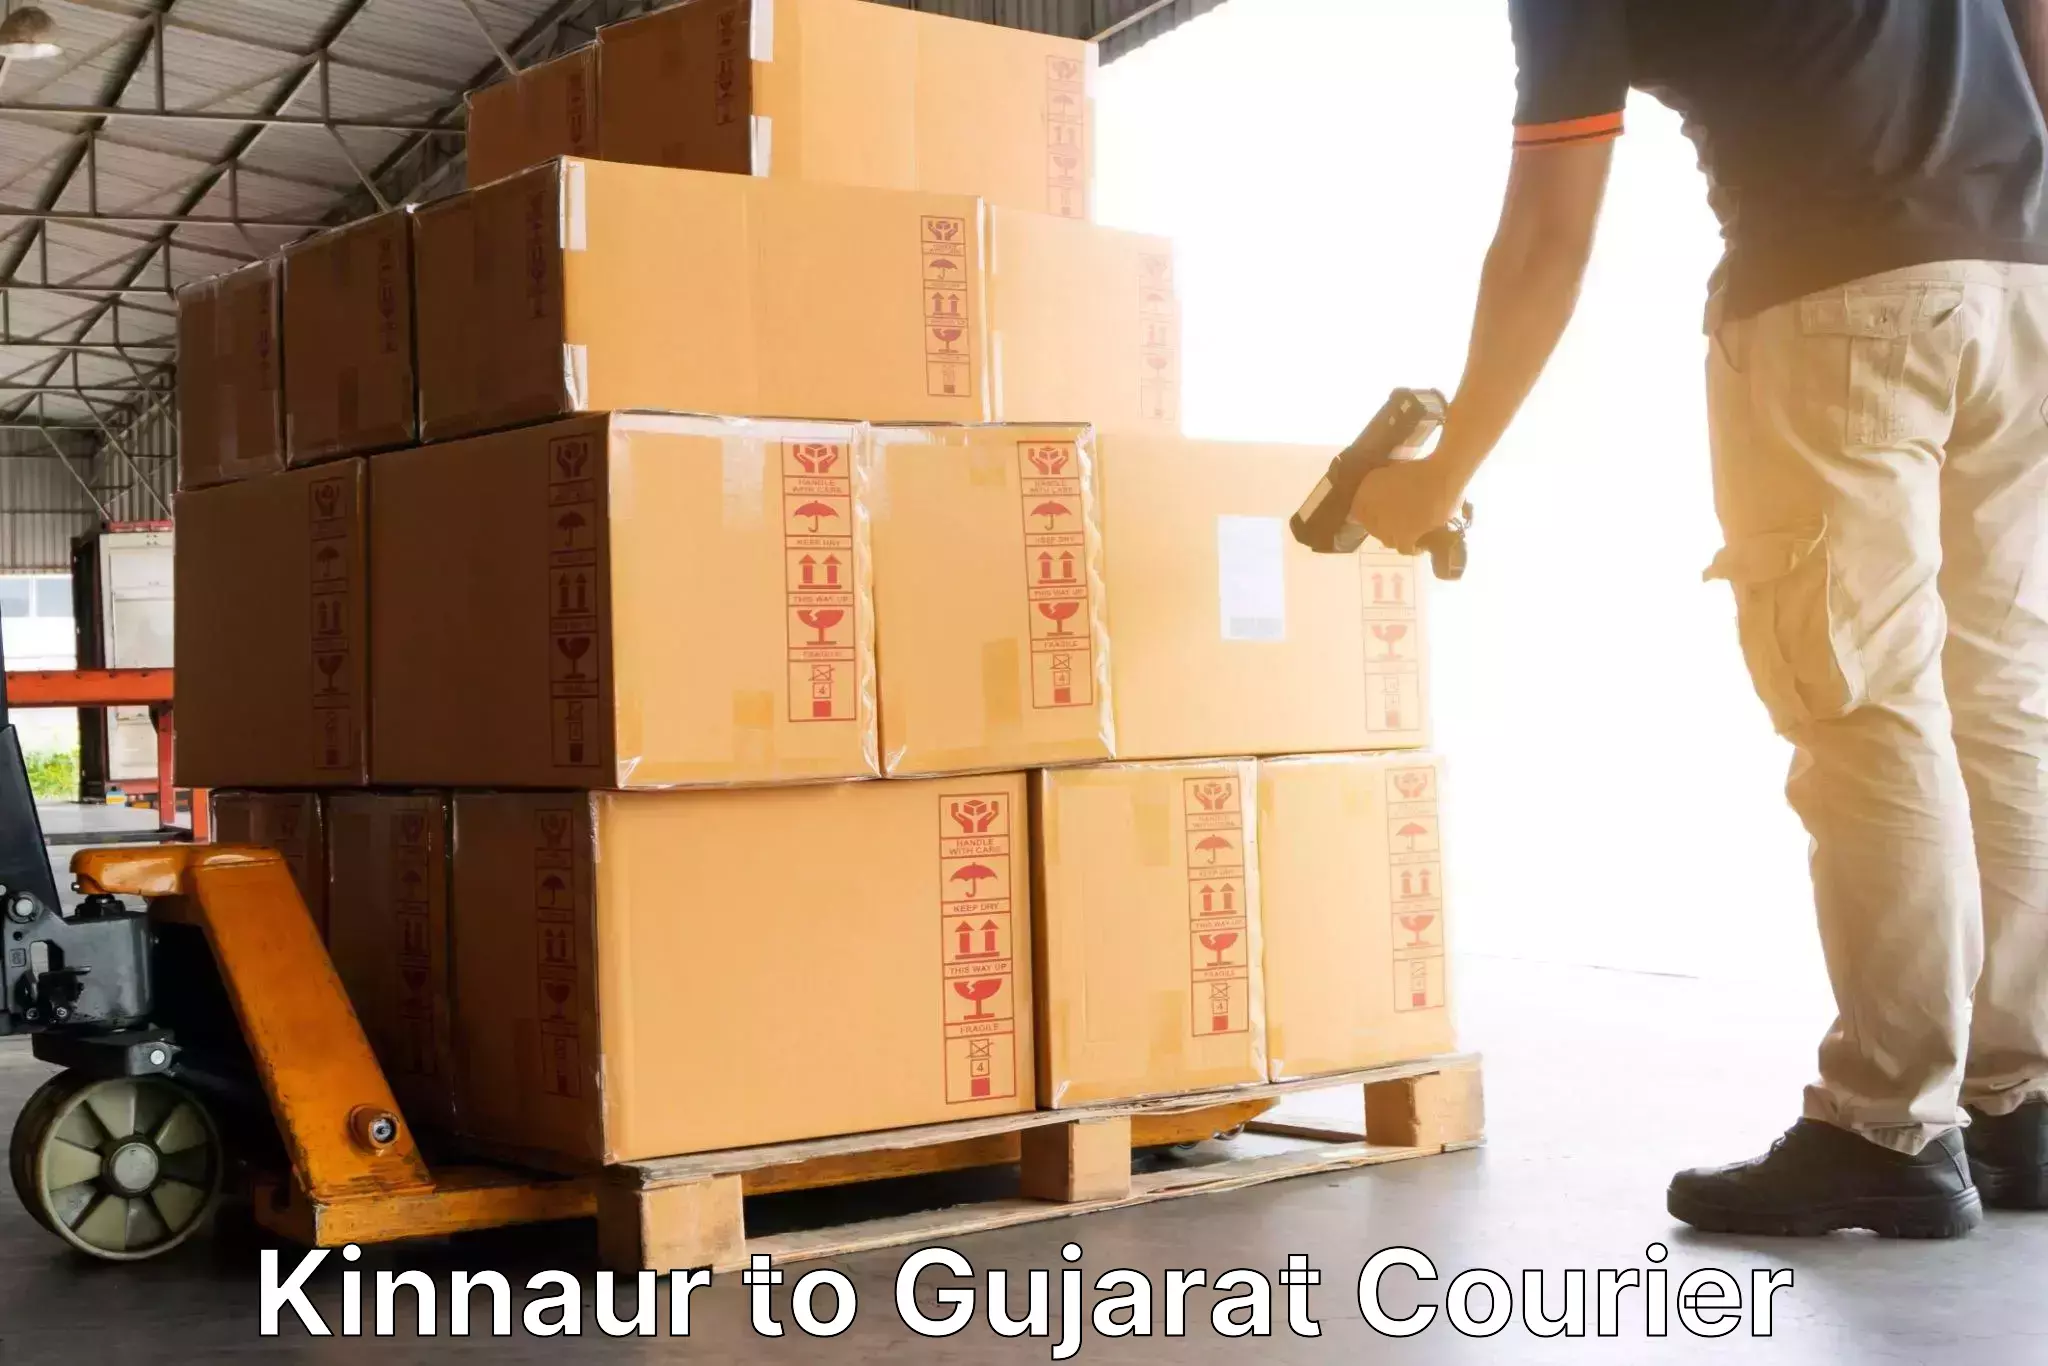 Courier service comparison Kinnaur to Navrangpura